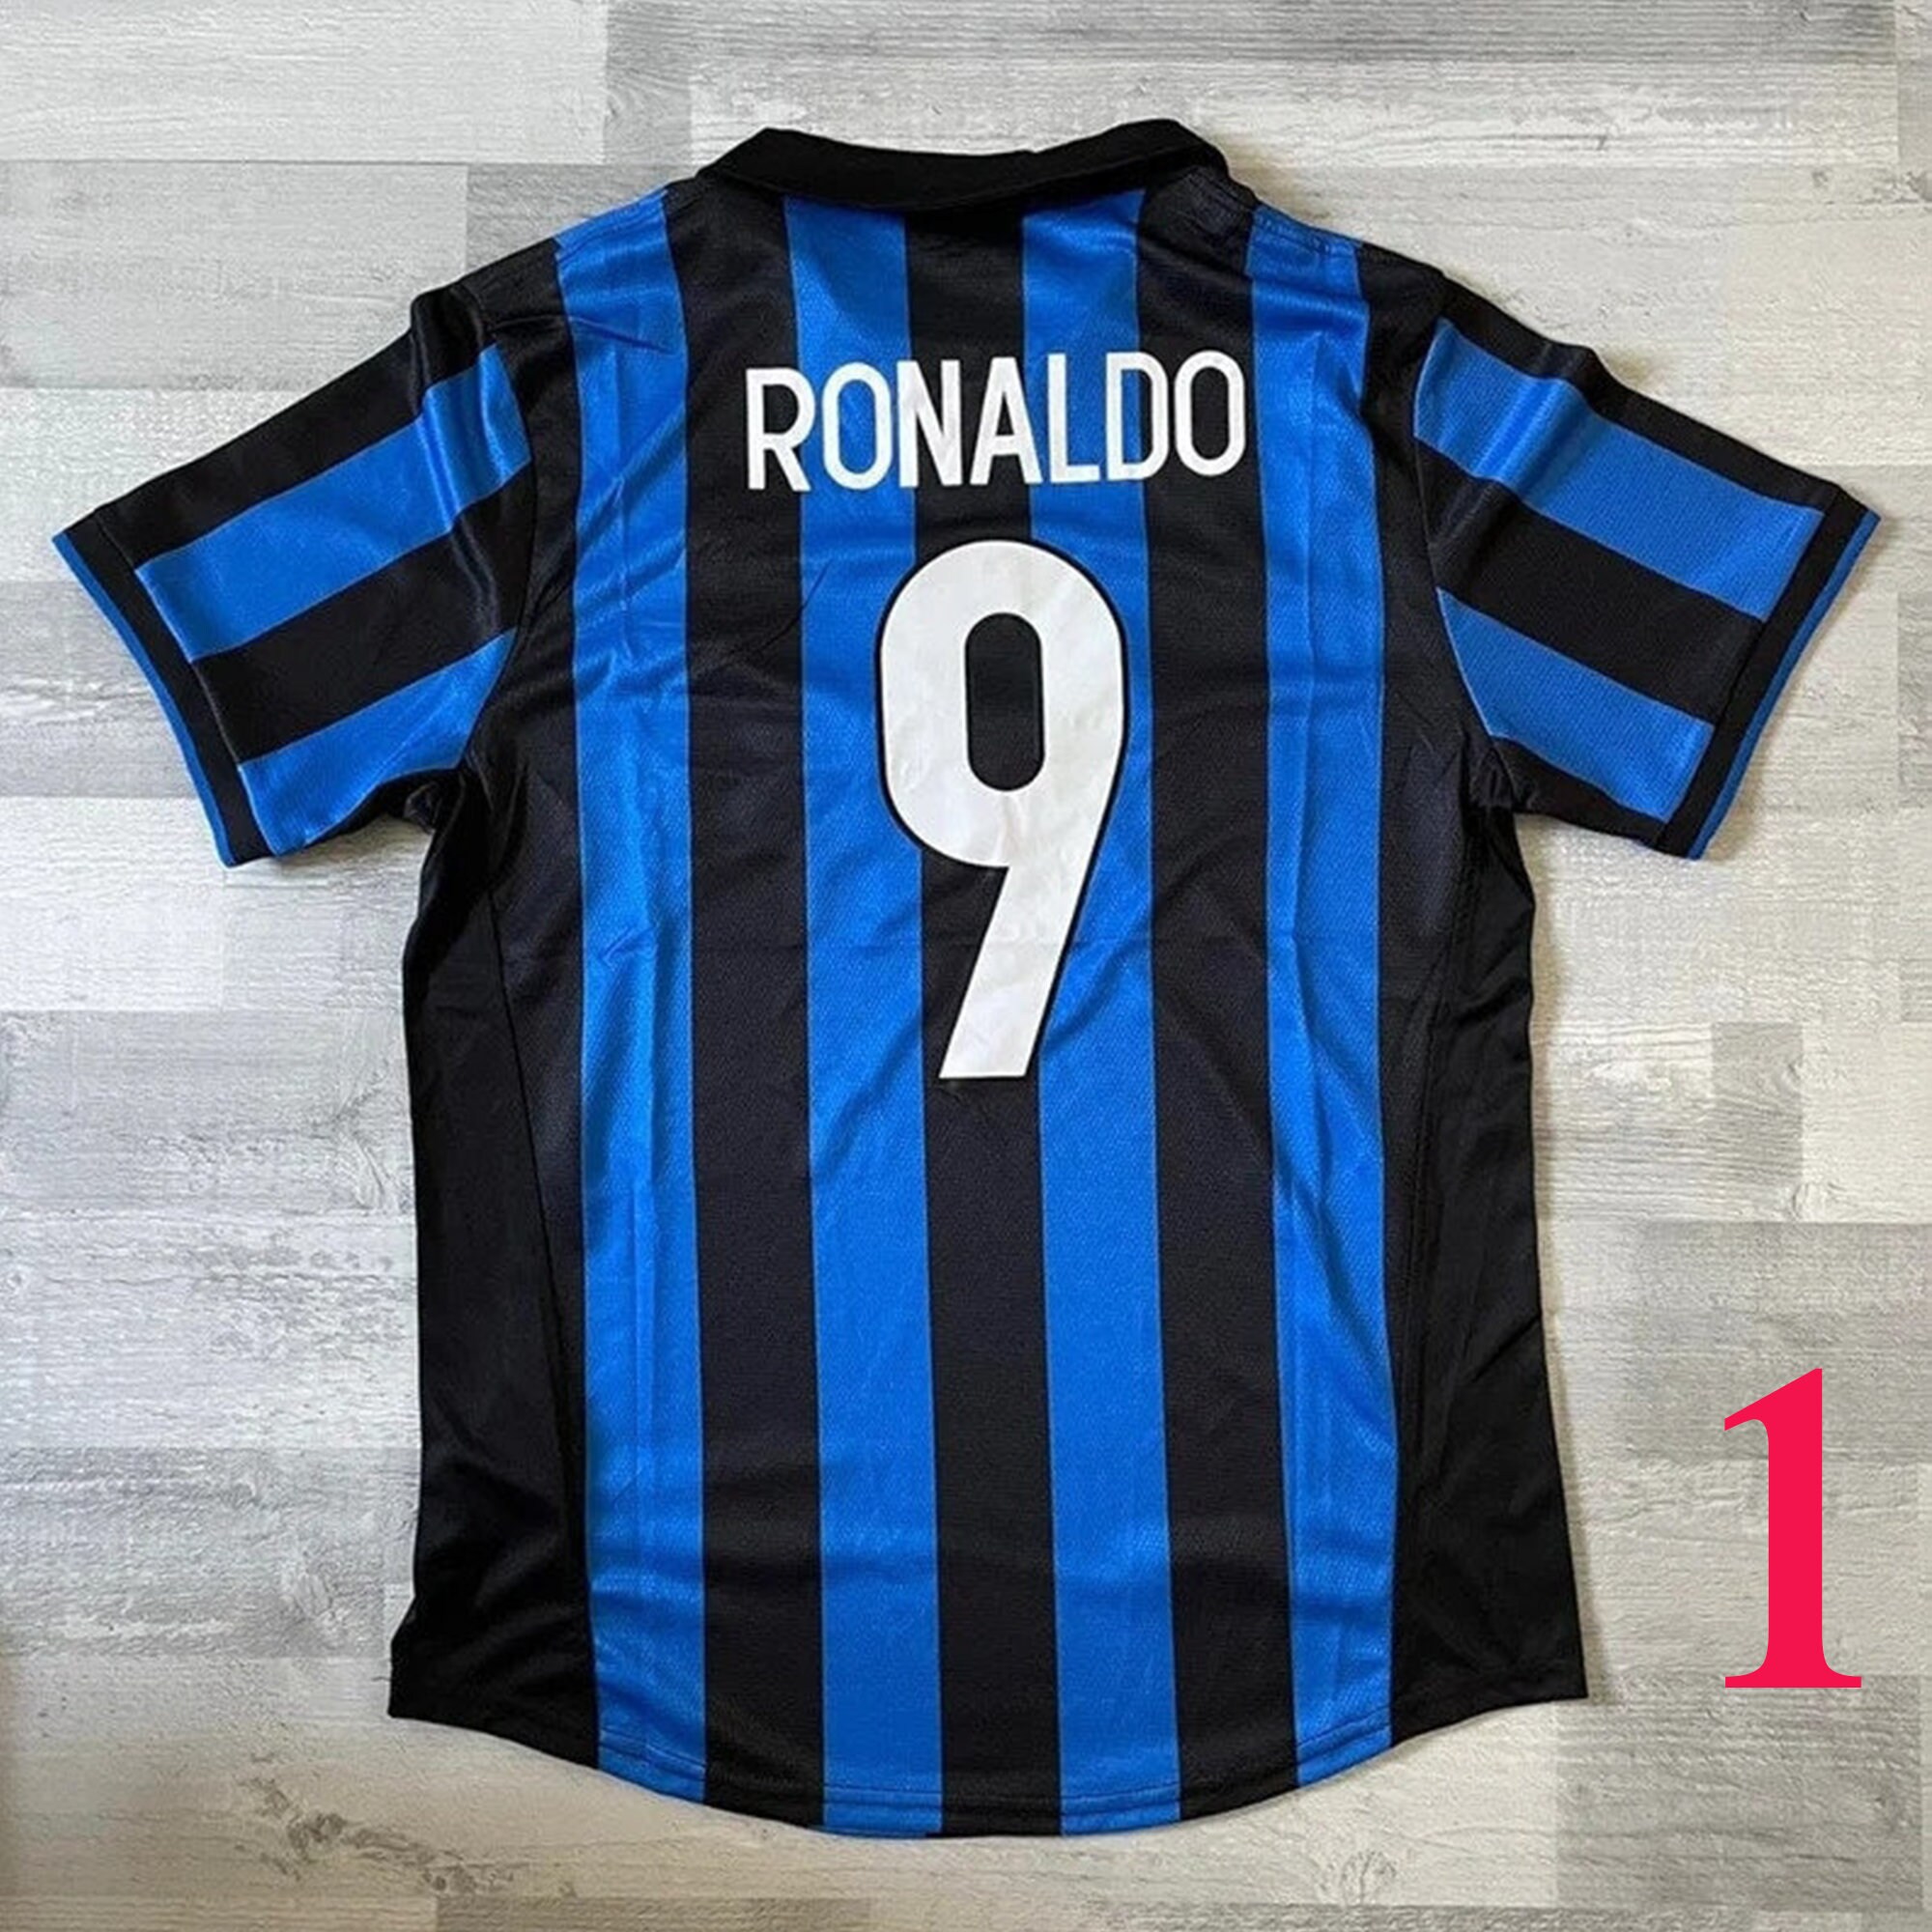 Inter Milan (Internazionale) 1999 2000 football shirt soccer jersey Nike  size XL